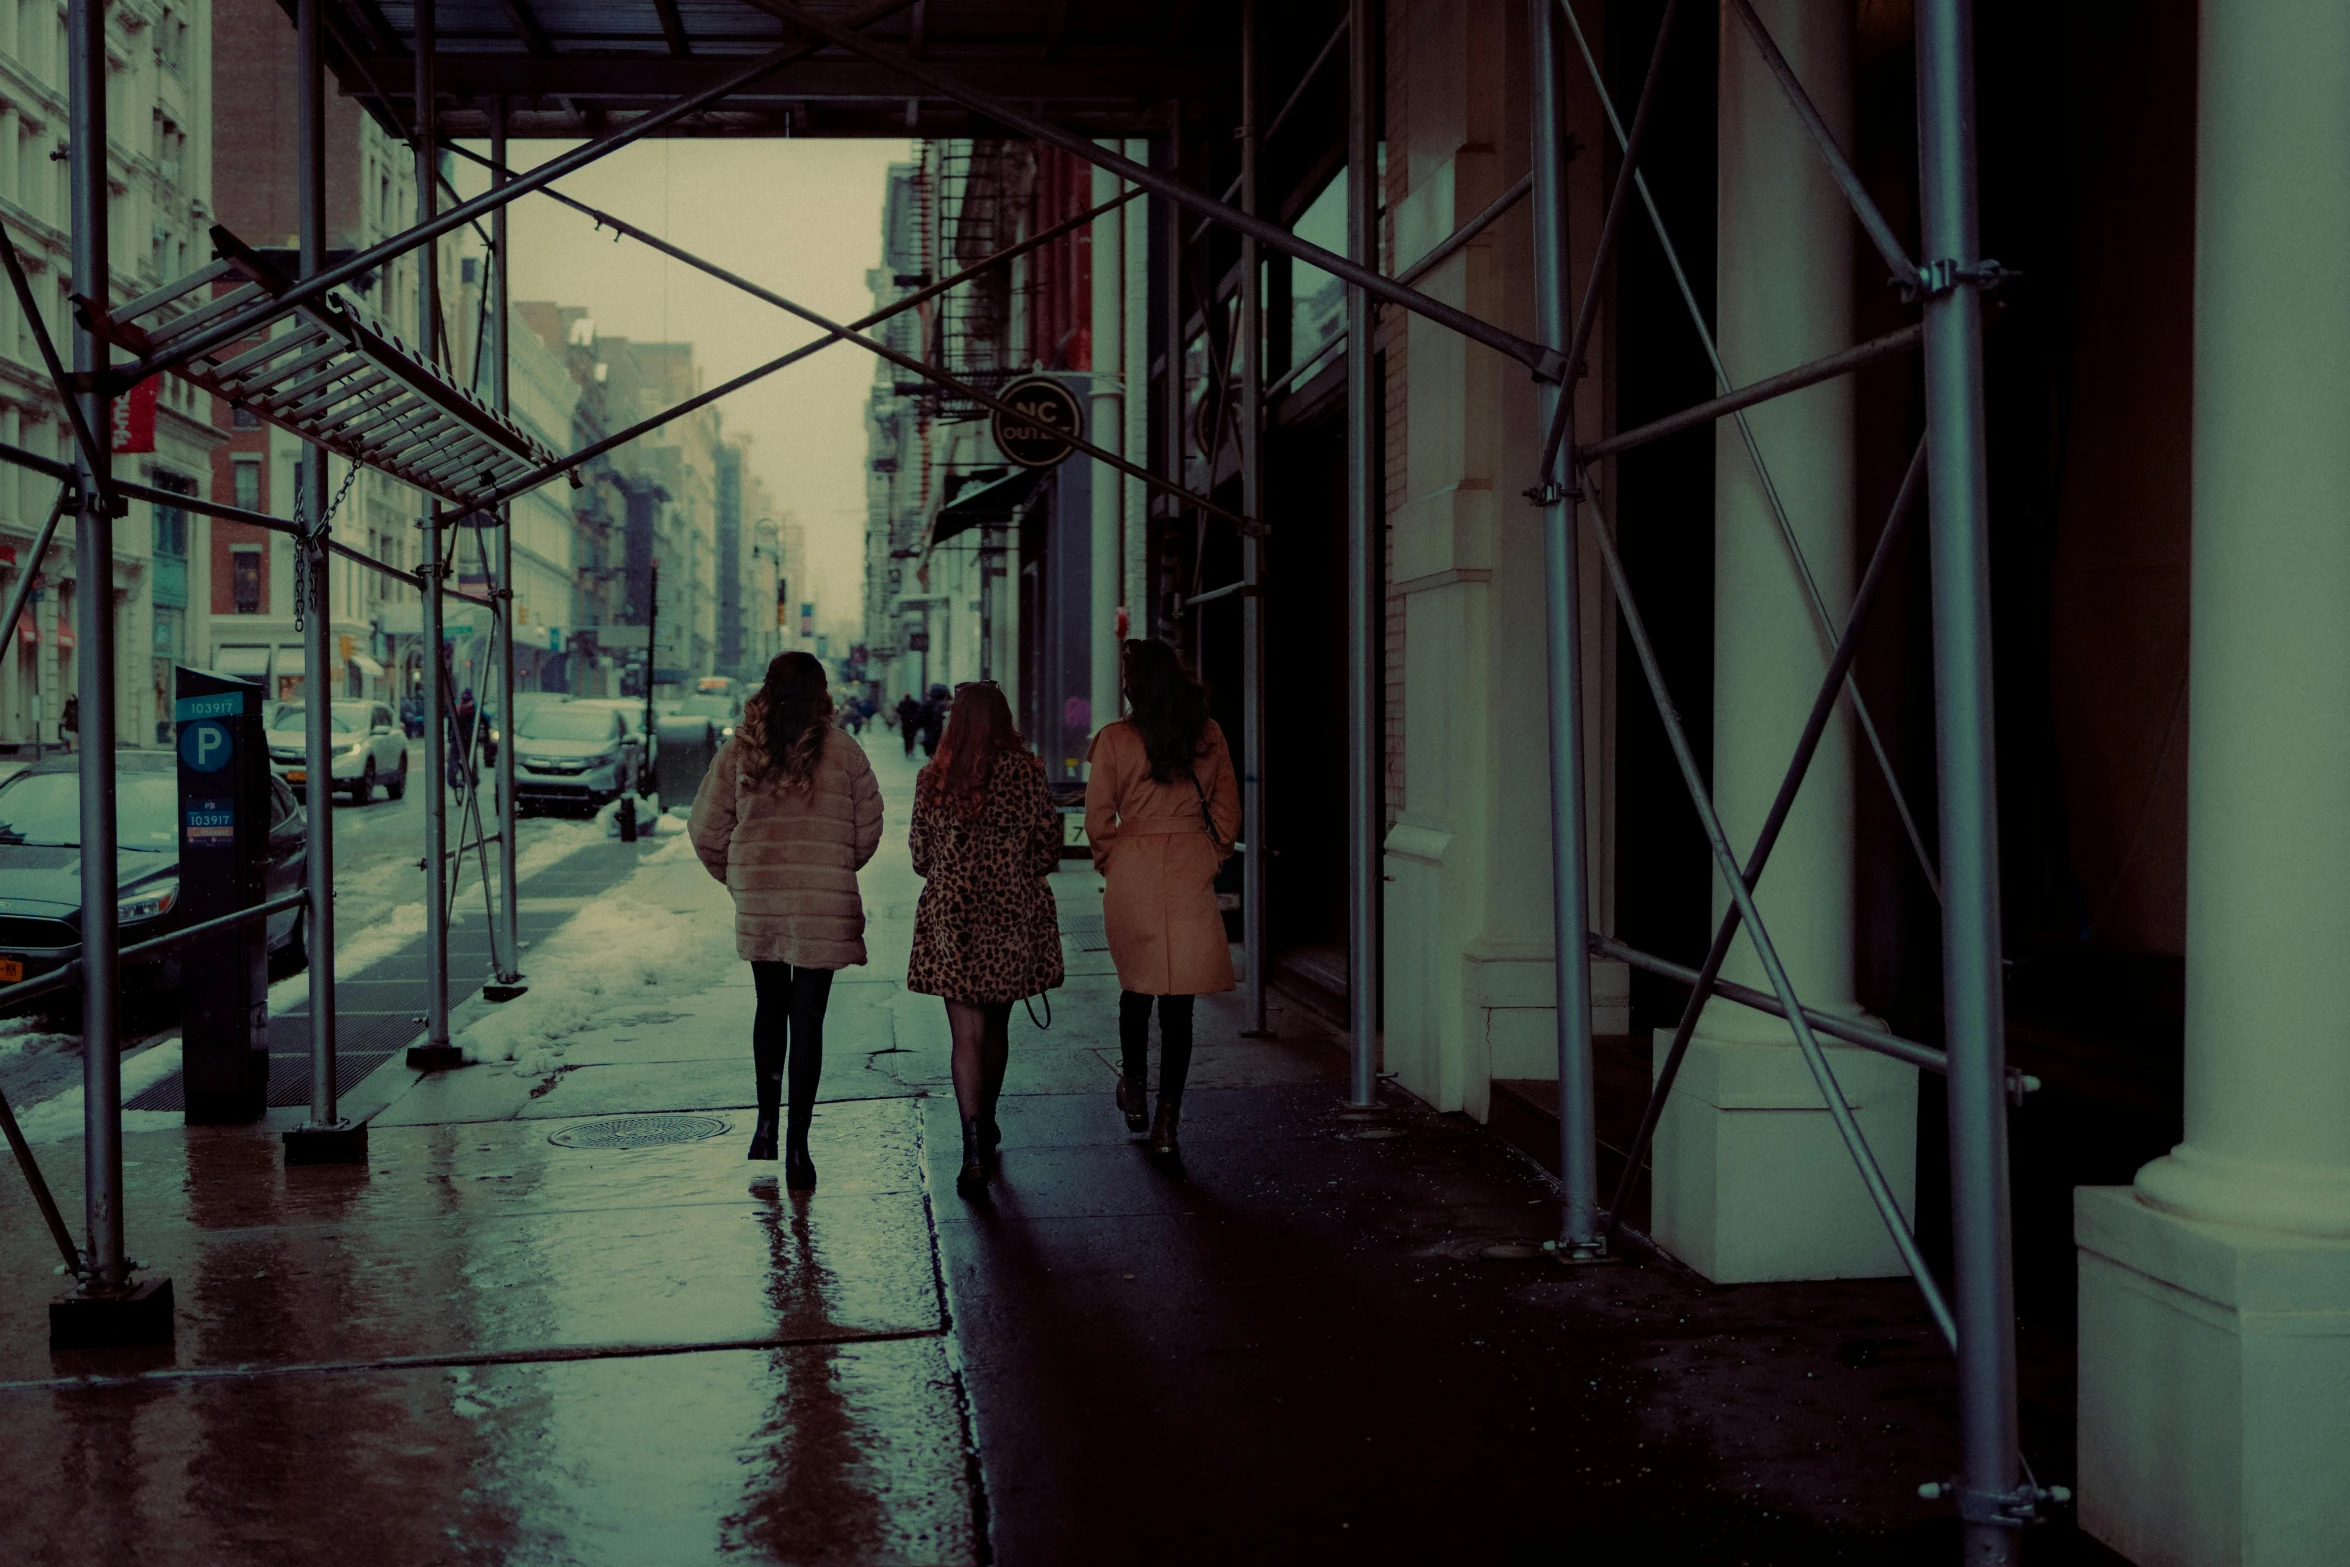 three people walking down the sidewalk in a city